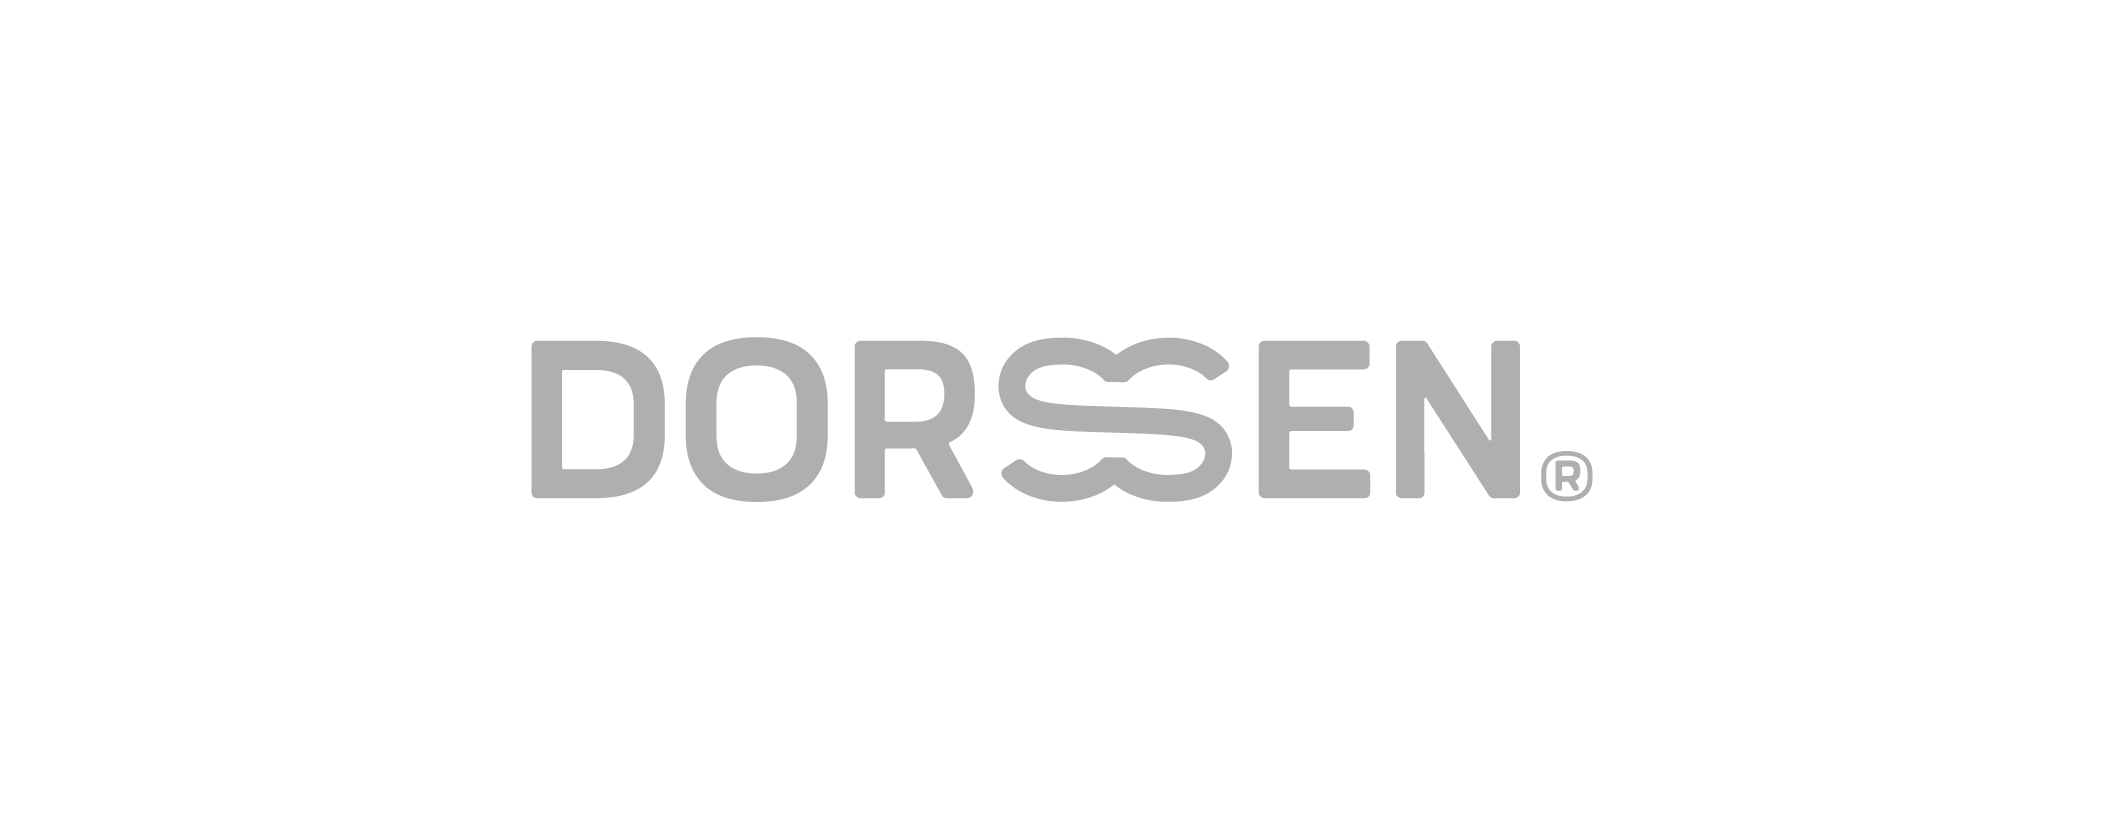 Dorssen.png